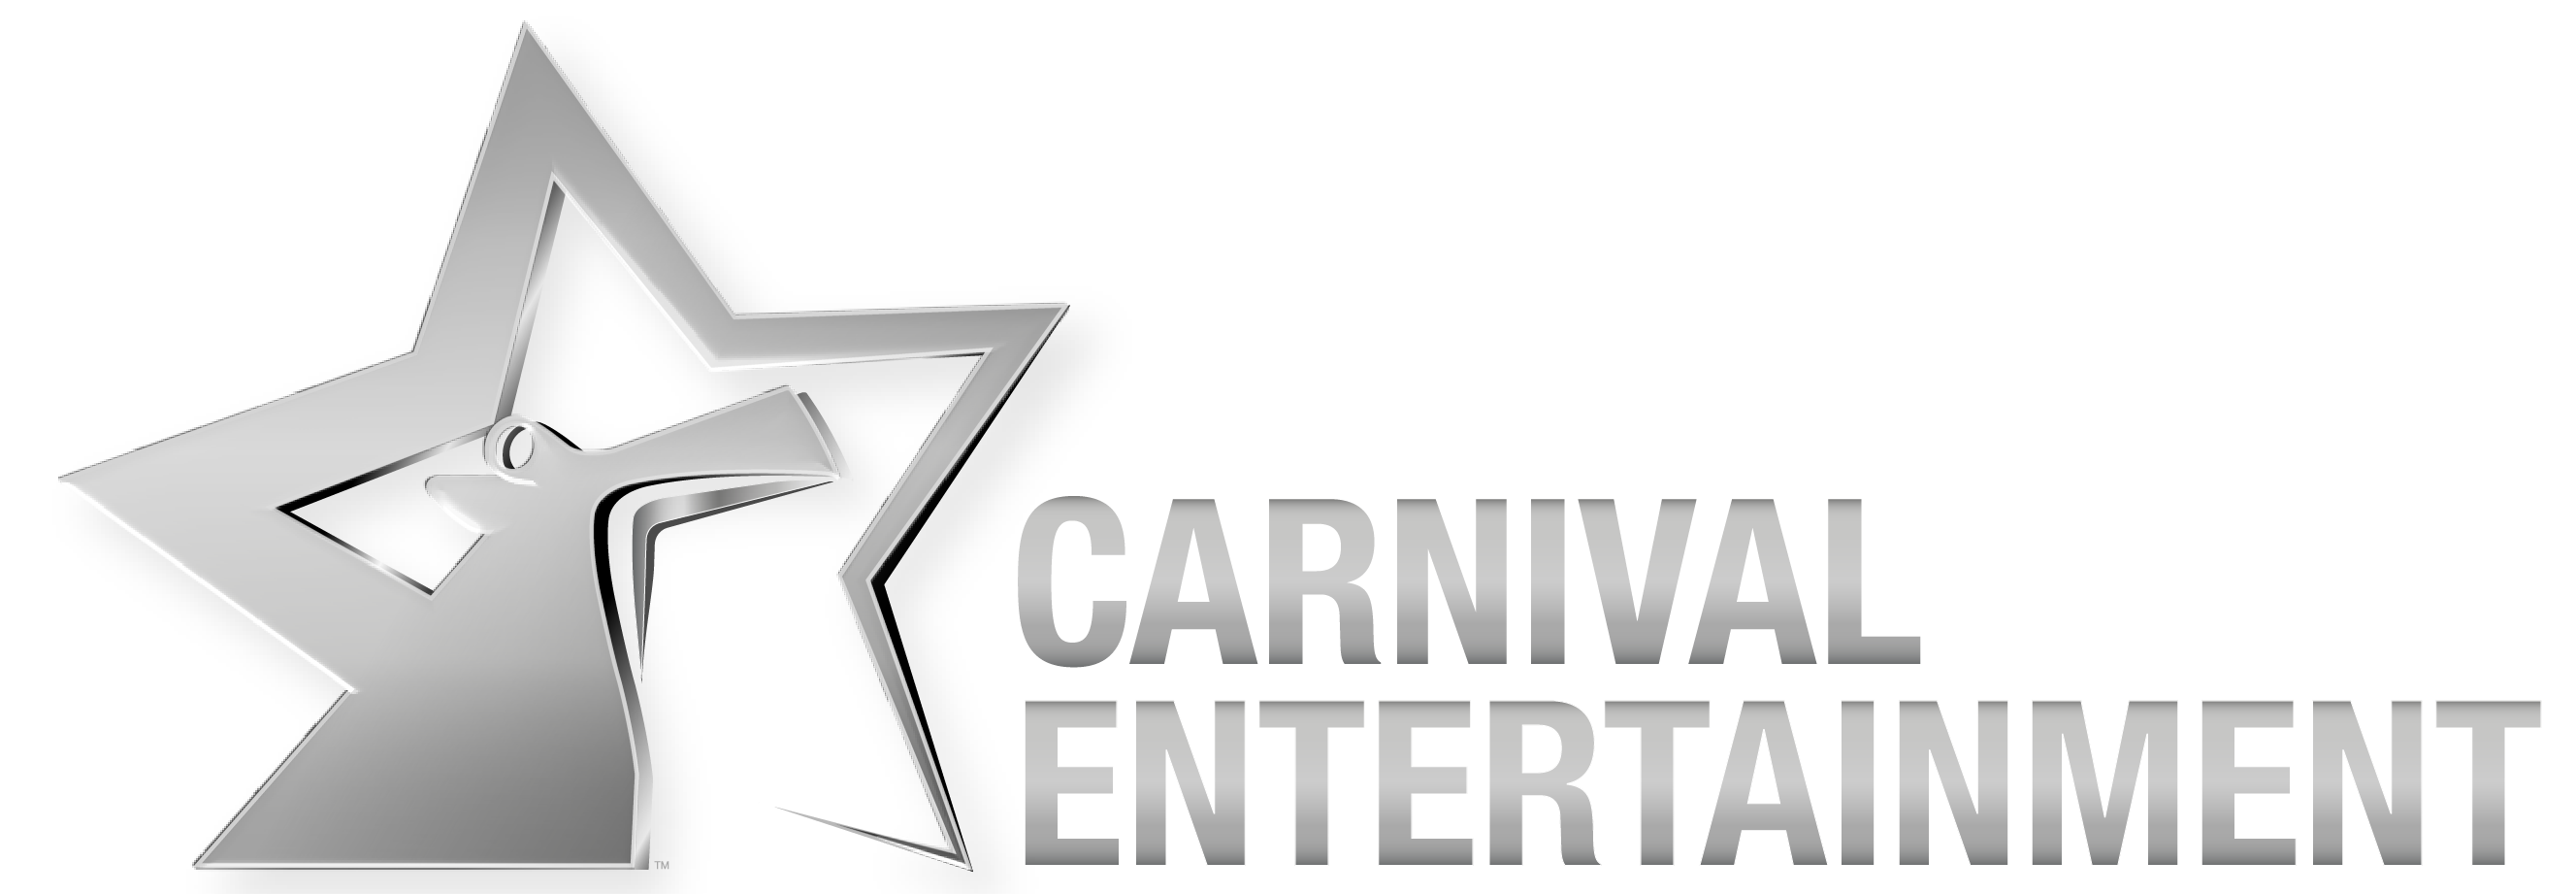 carnival cruise recruitment